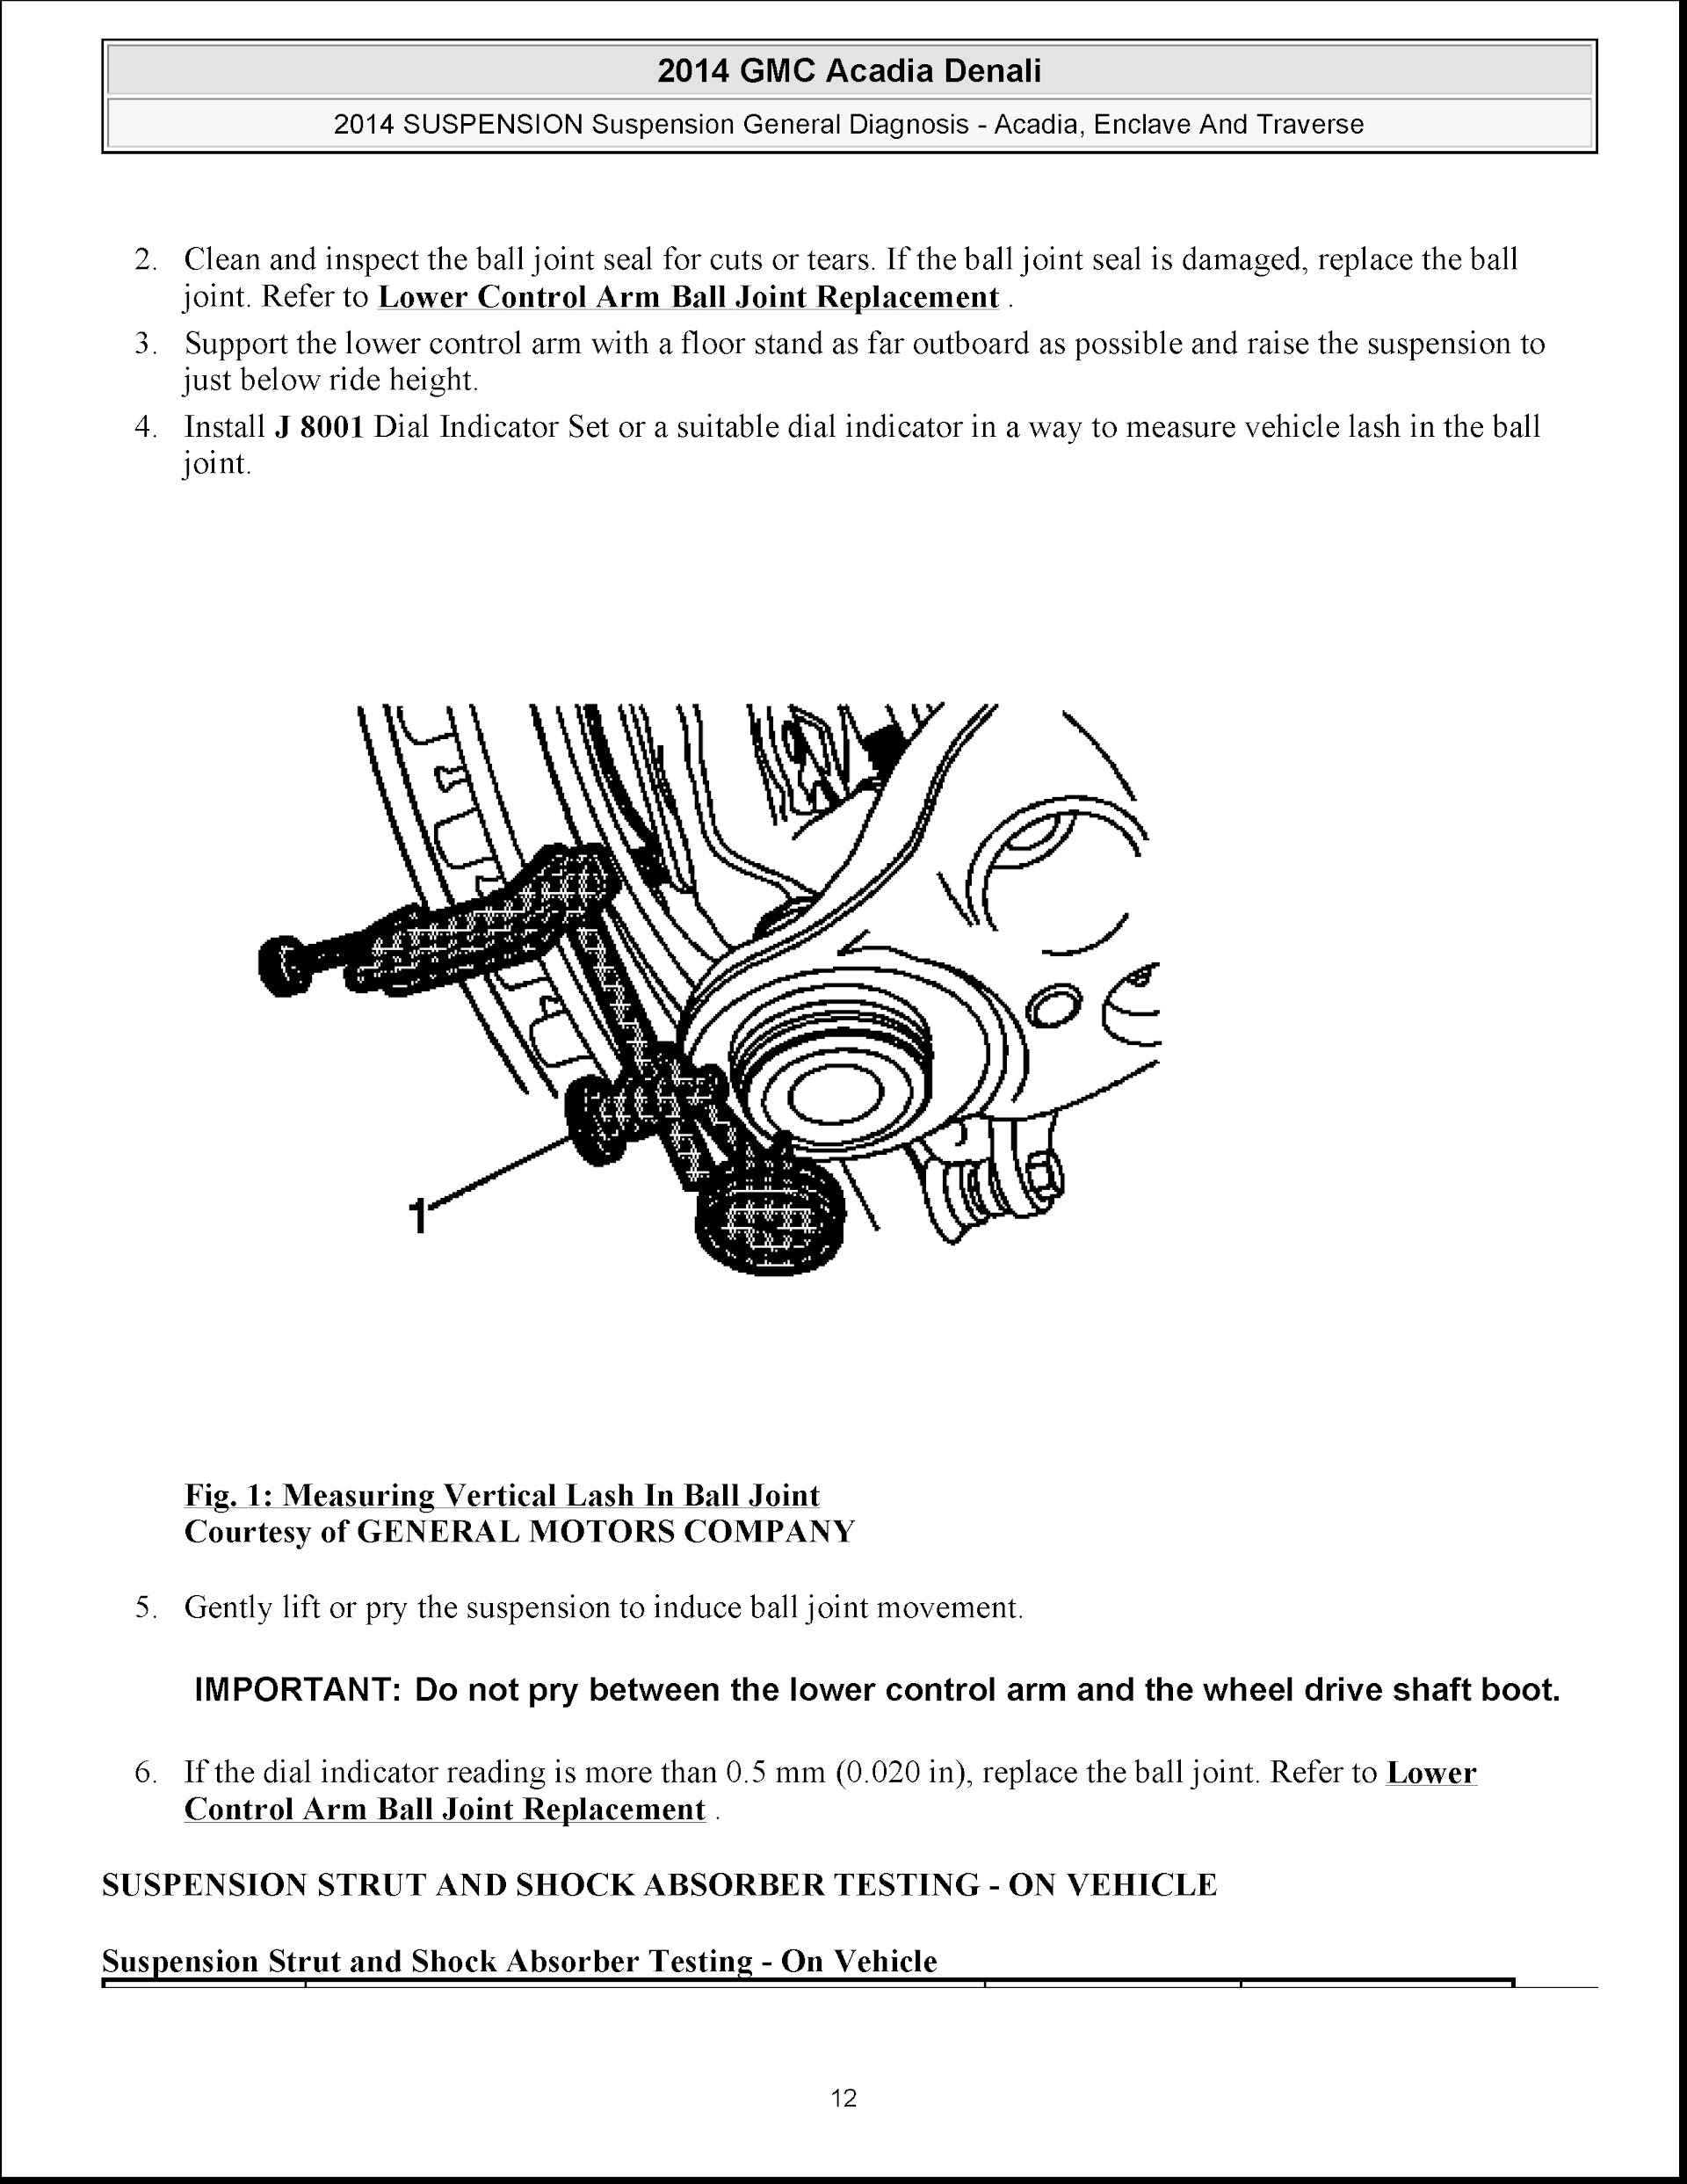 2013-2016 GMC Acadia Repair Manual (Denali, Enclave and Chevrolet Traverse), Suspension System